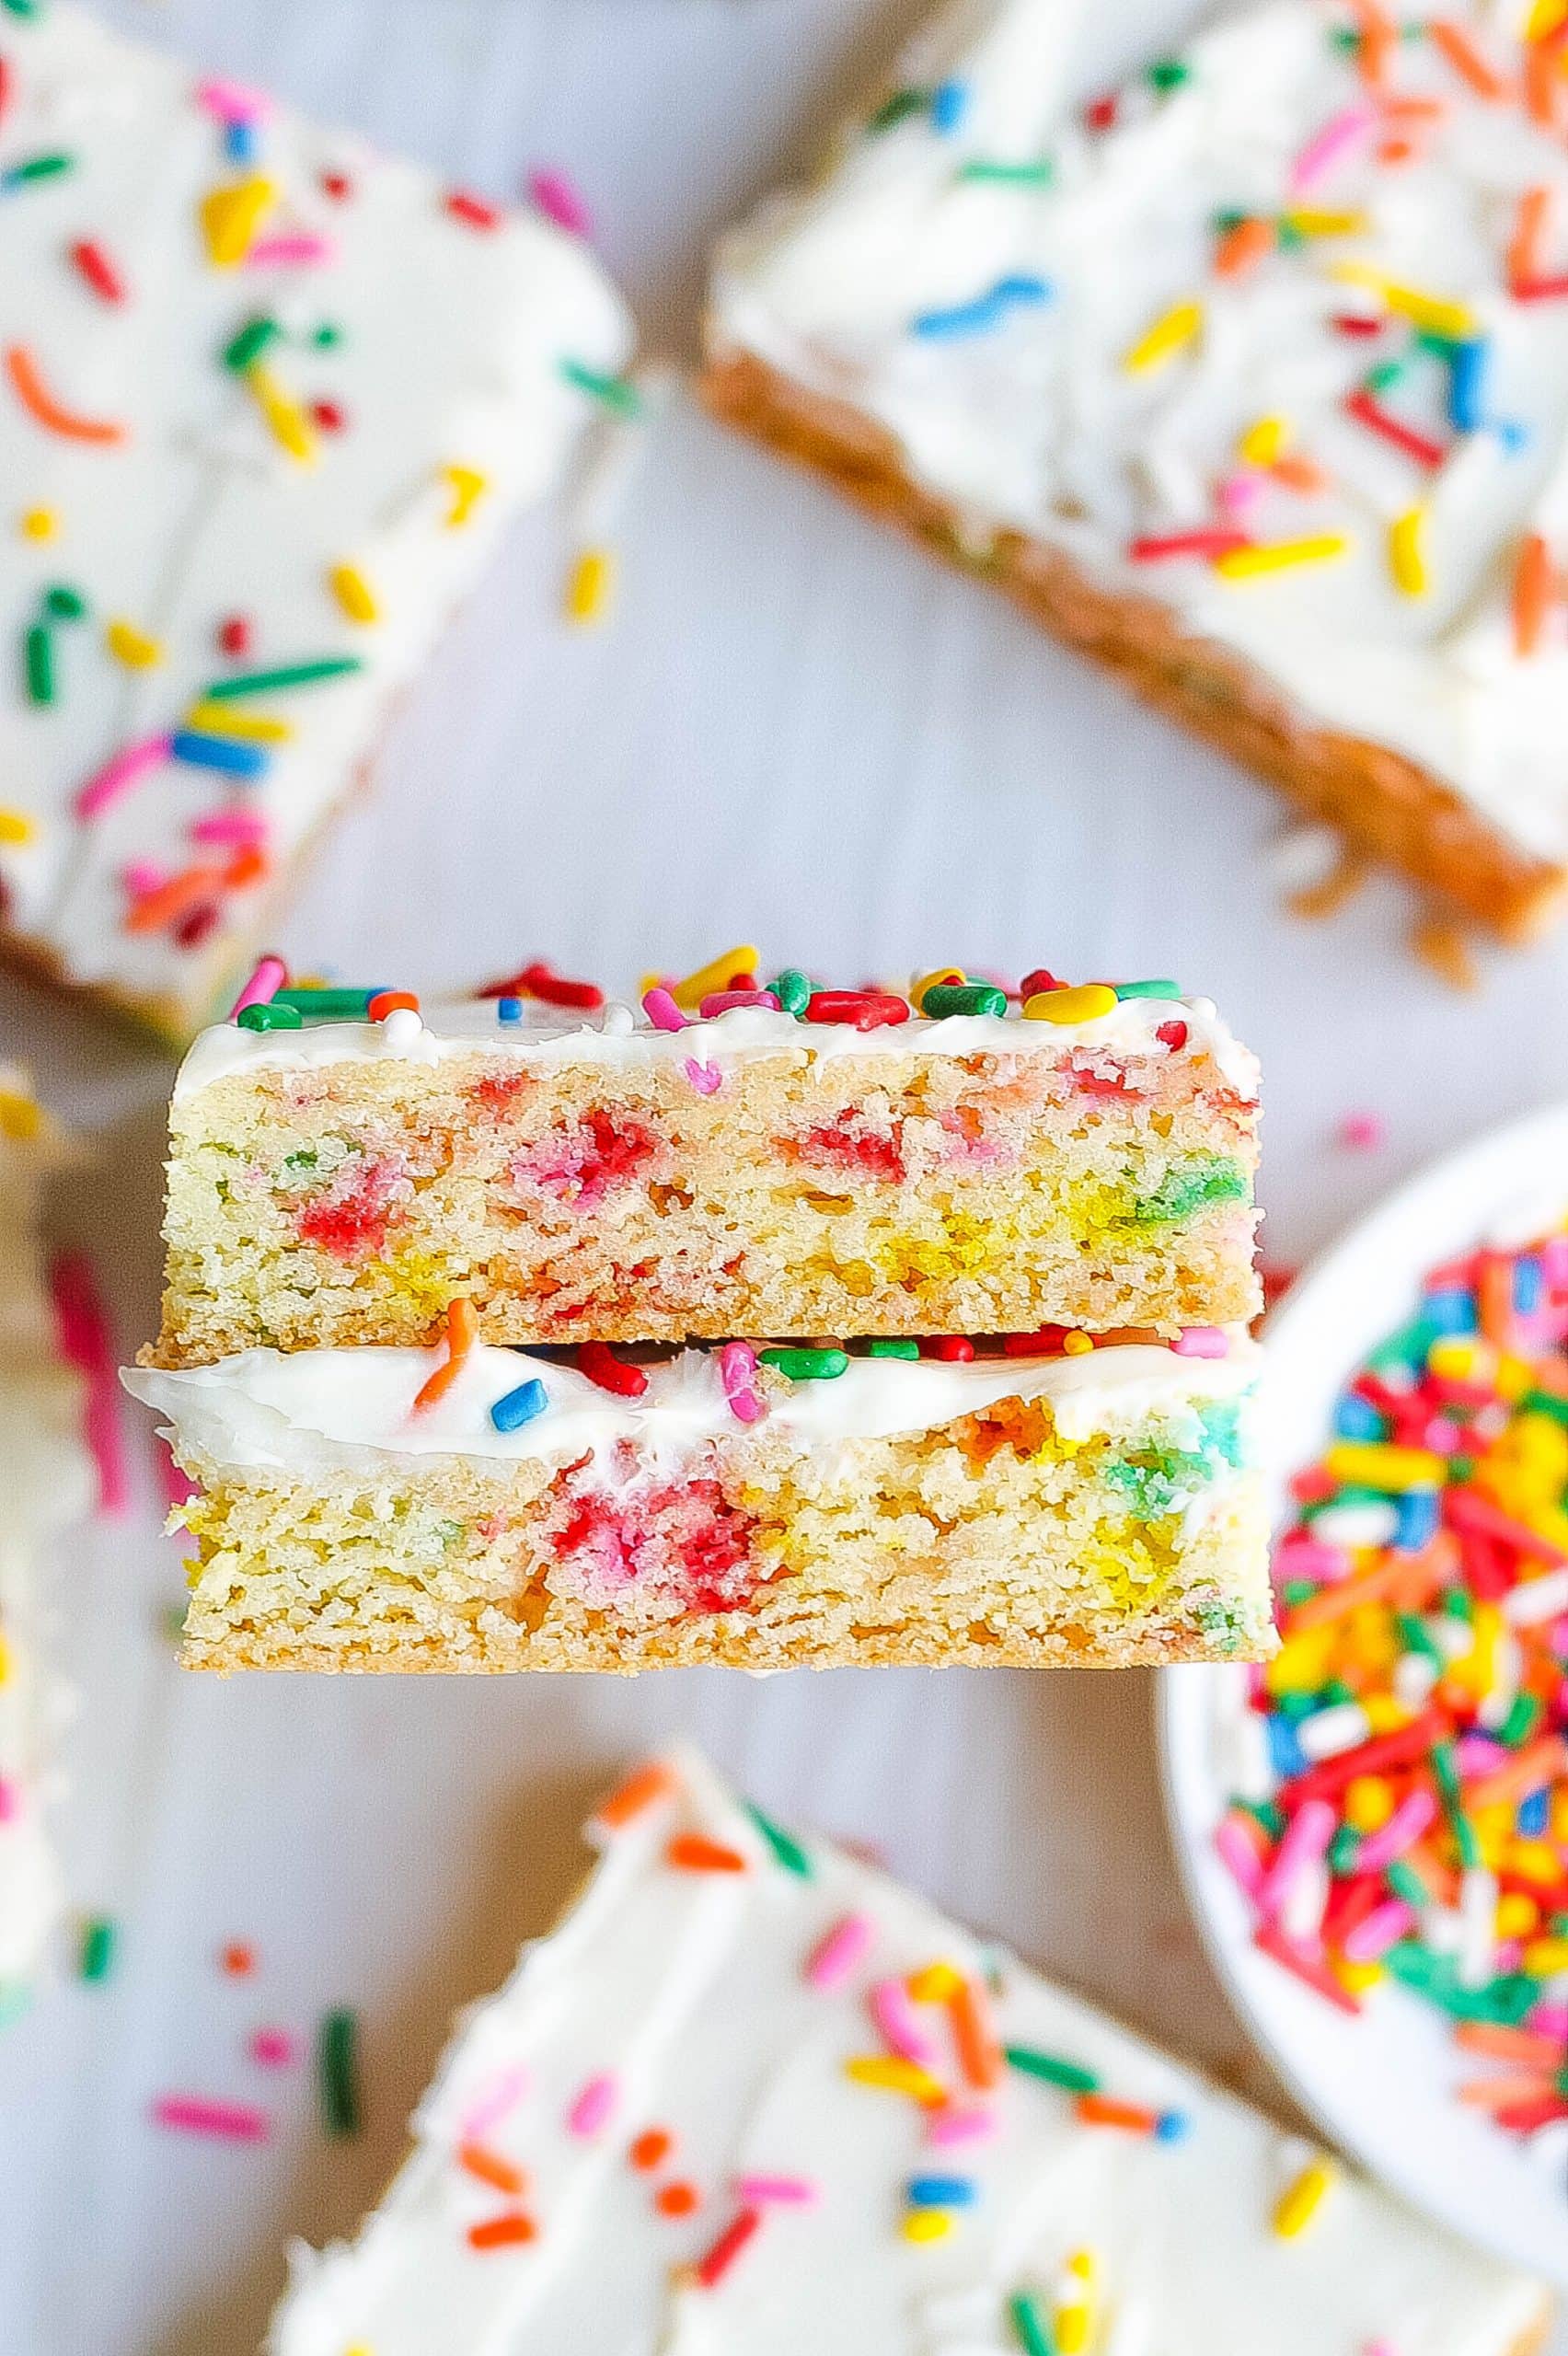 Funfetti Cake Mix Cookie Bars